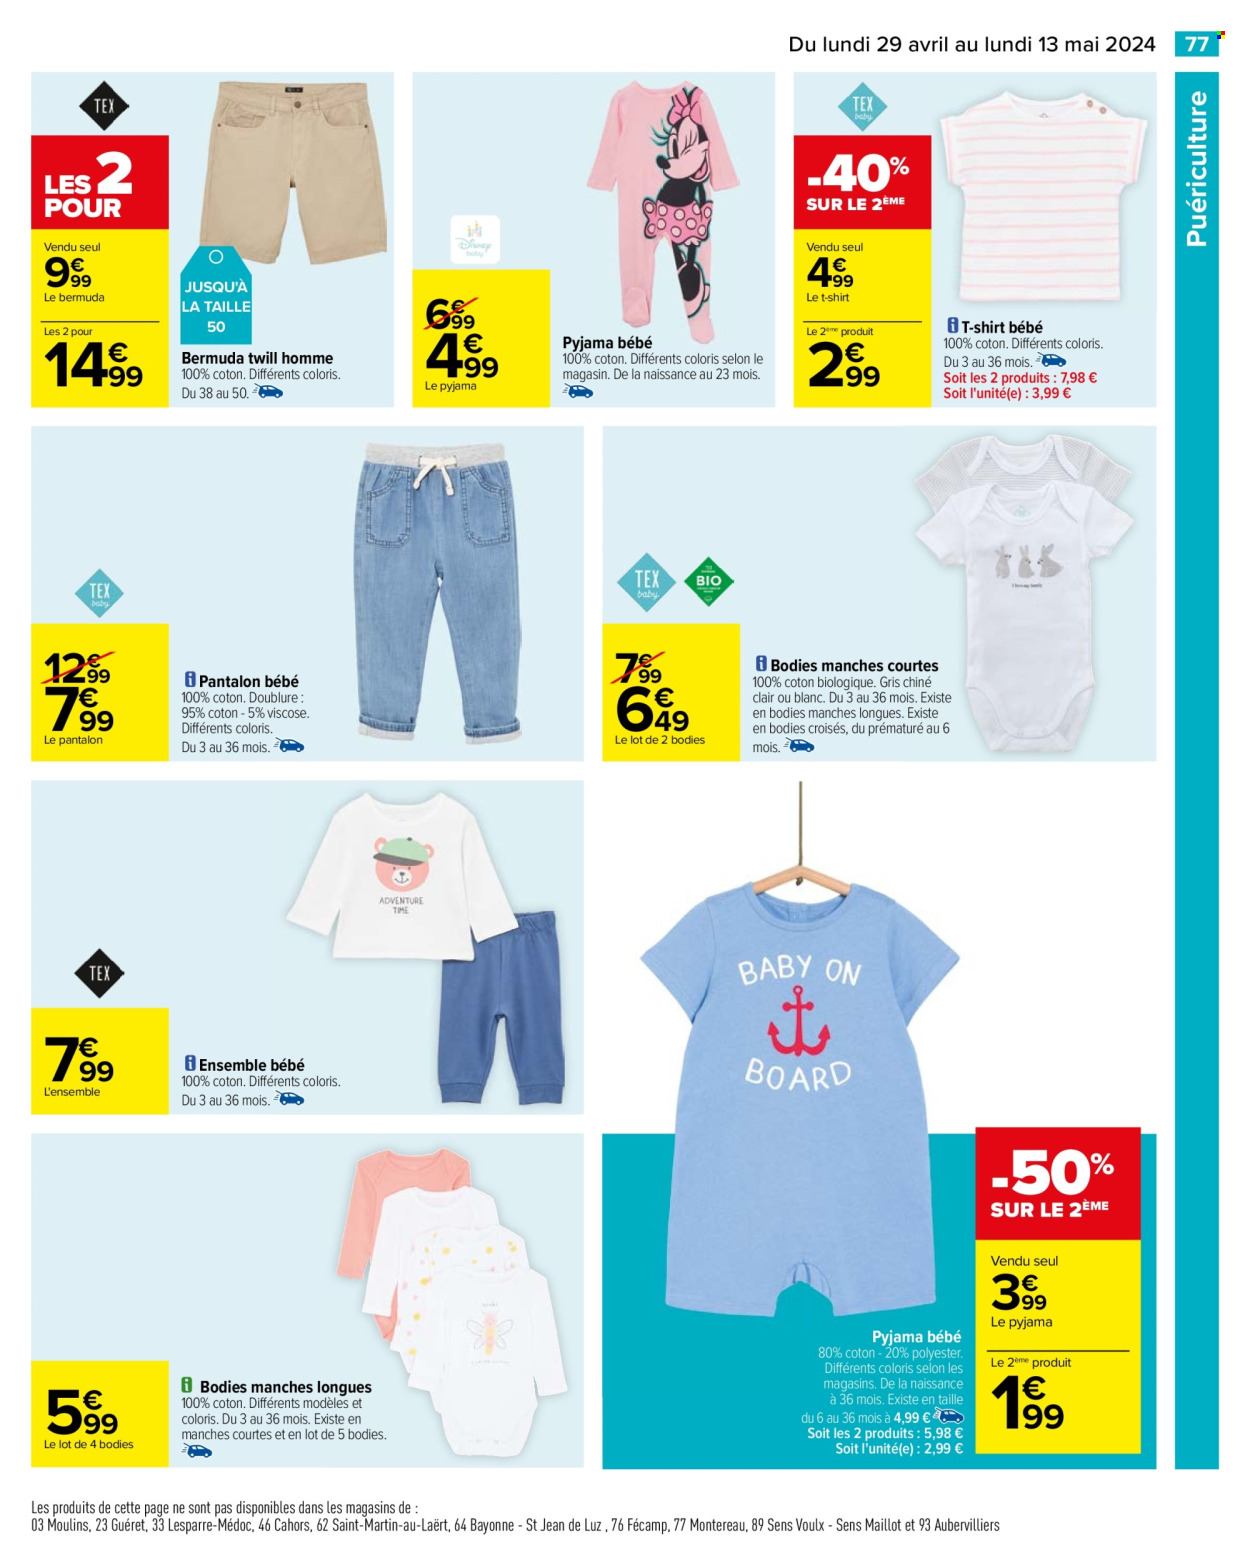 thumbnail - Catalogue Carrefour Hypermarchés - 29/04/2024 - 13/05/2024 - Produits soldés - Disney, pyjama, t-shirt, pantalon, ensemble bébé. Page 81.